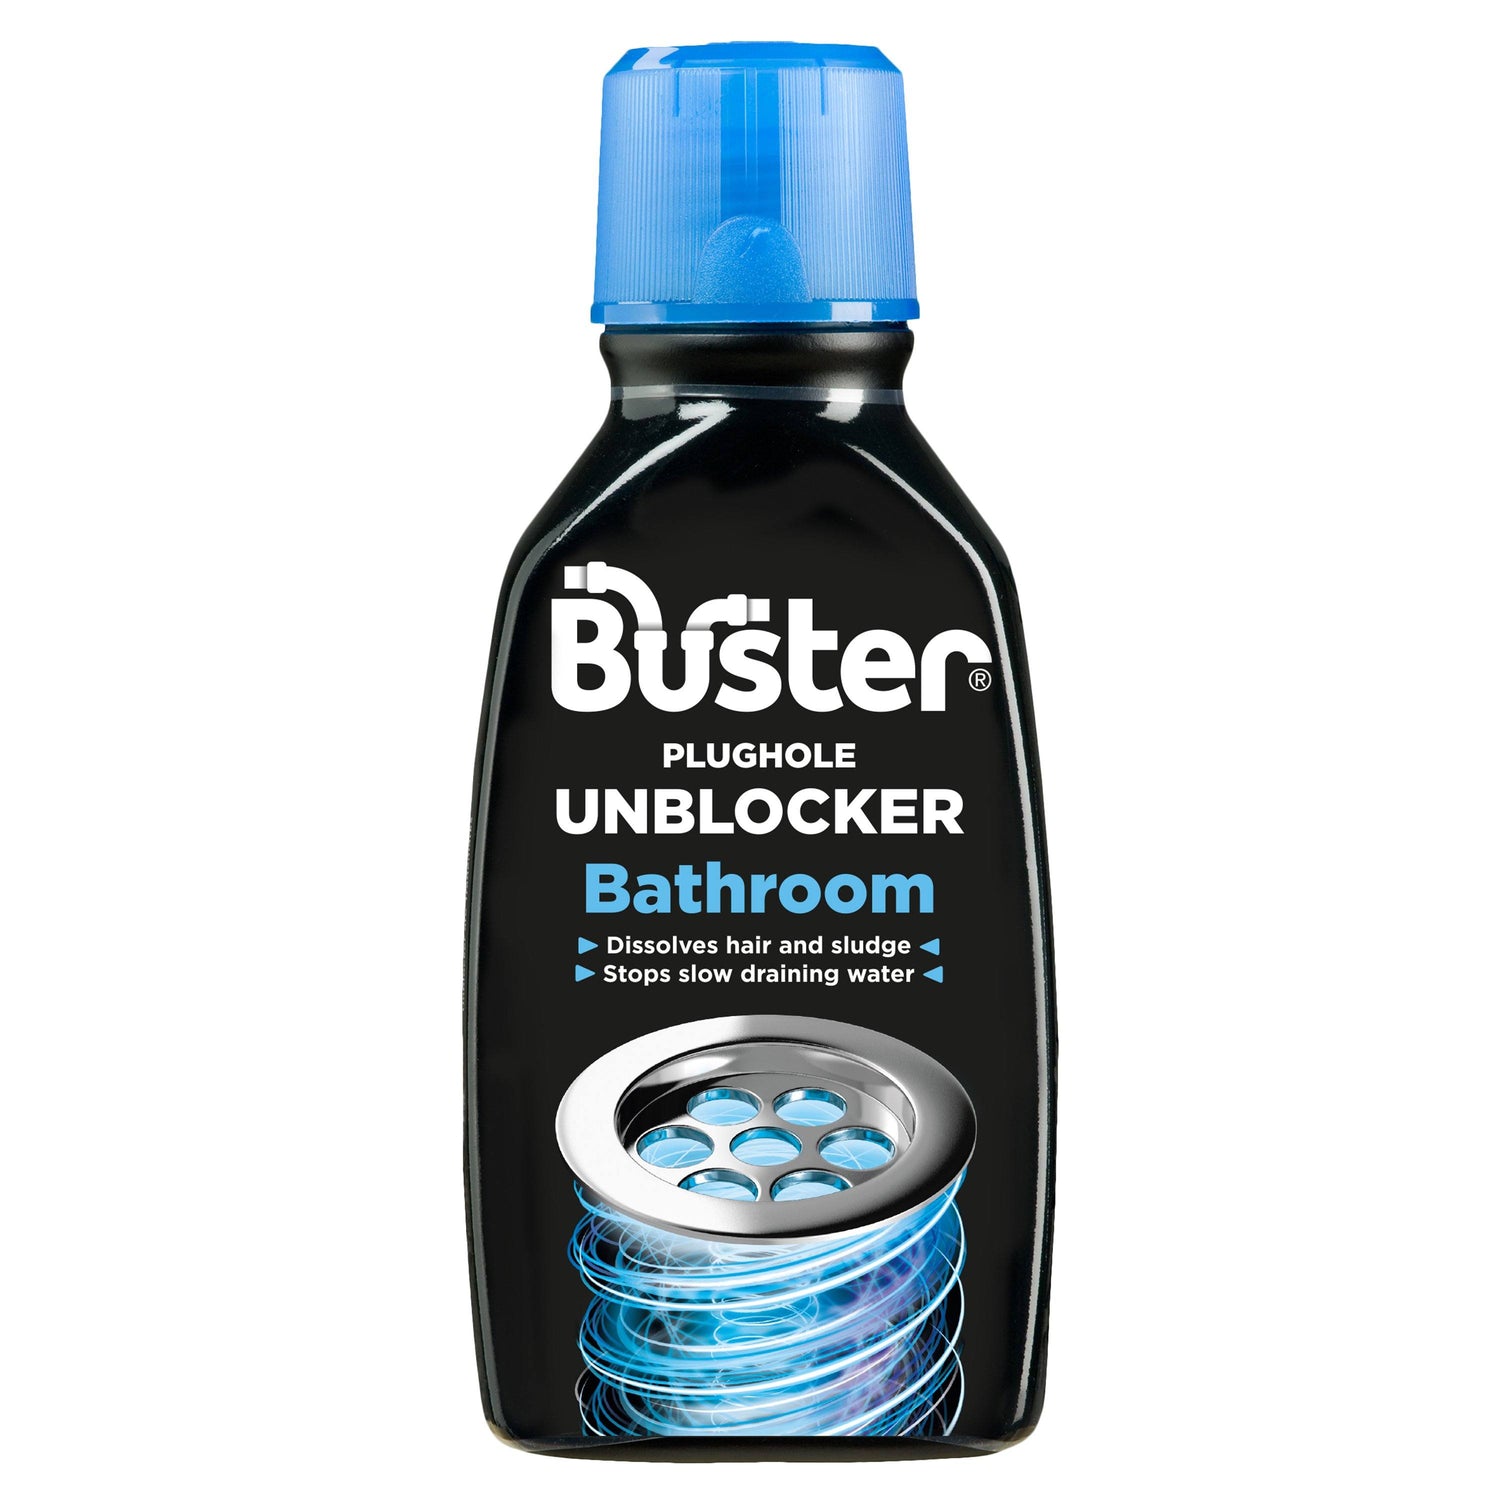 BUSTER Bathroom Plughole Unblocker 300ml - Bloom Concept